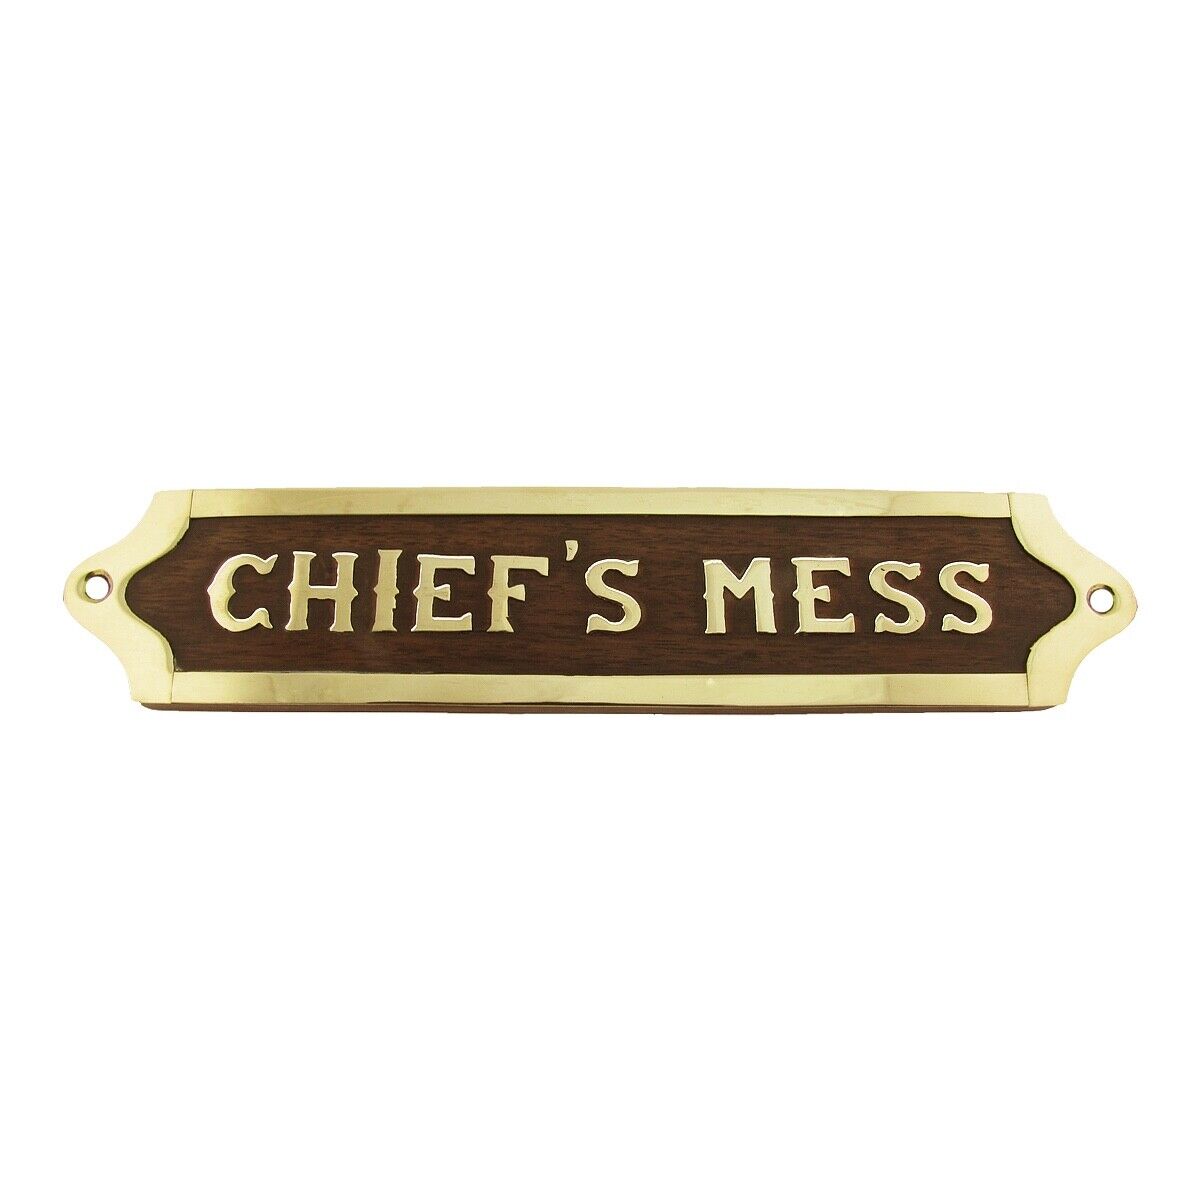 Chiefs Mess Brass Door Sign Maritime Ships Plaque Ship Wall Decor US Navy Gift